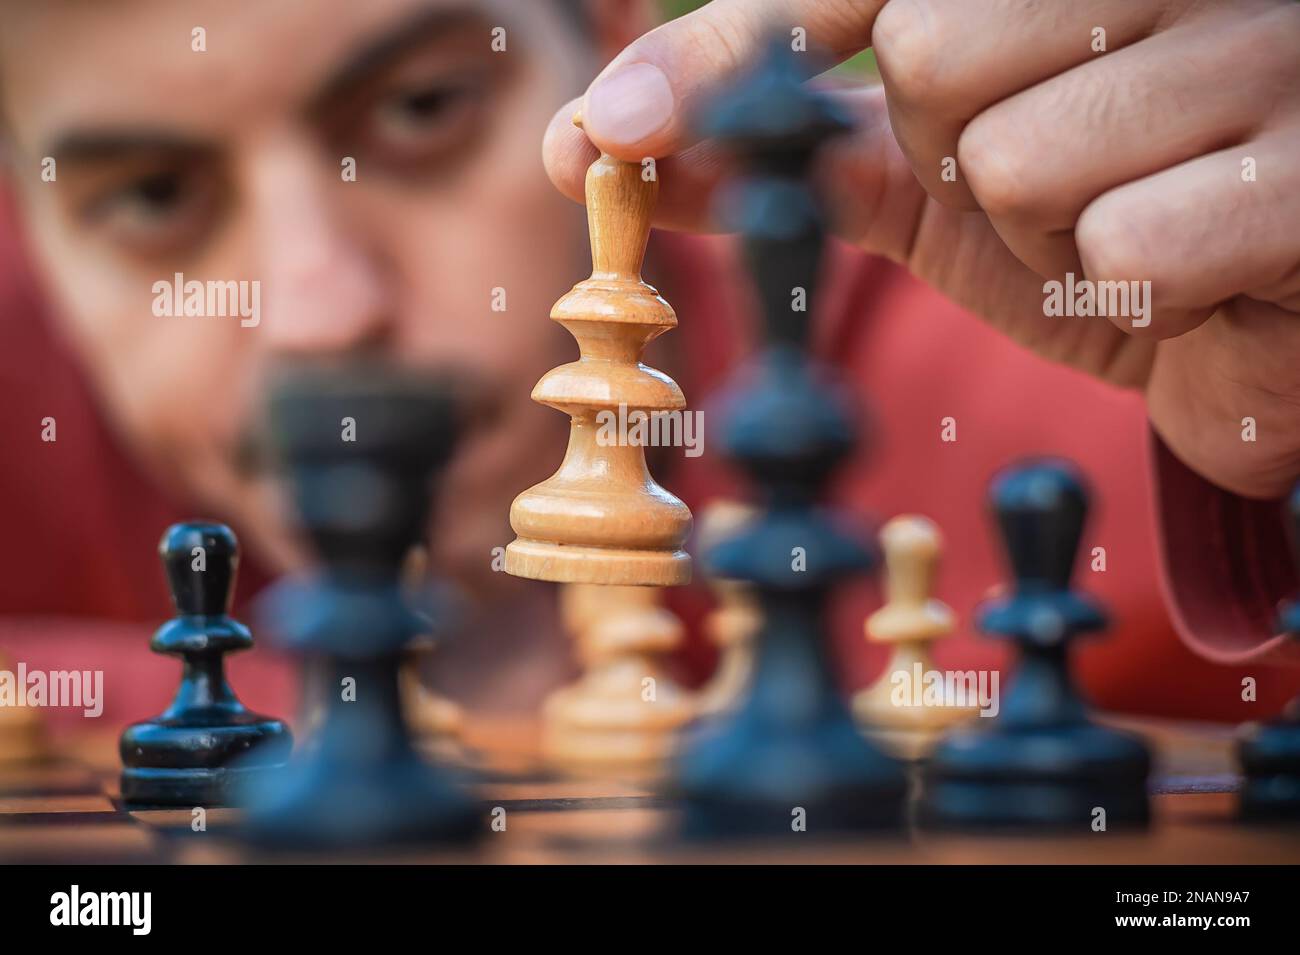 Man Contemplating His Next Move Chess Stock Photo 1948539421